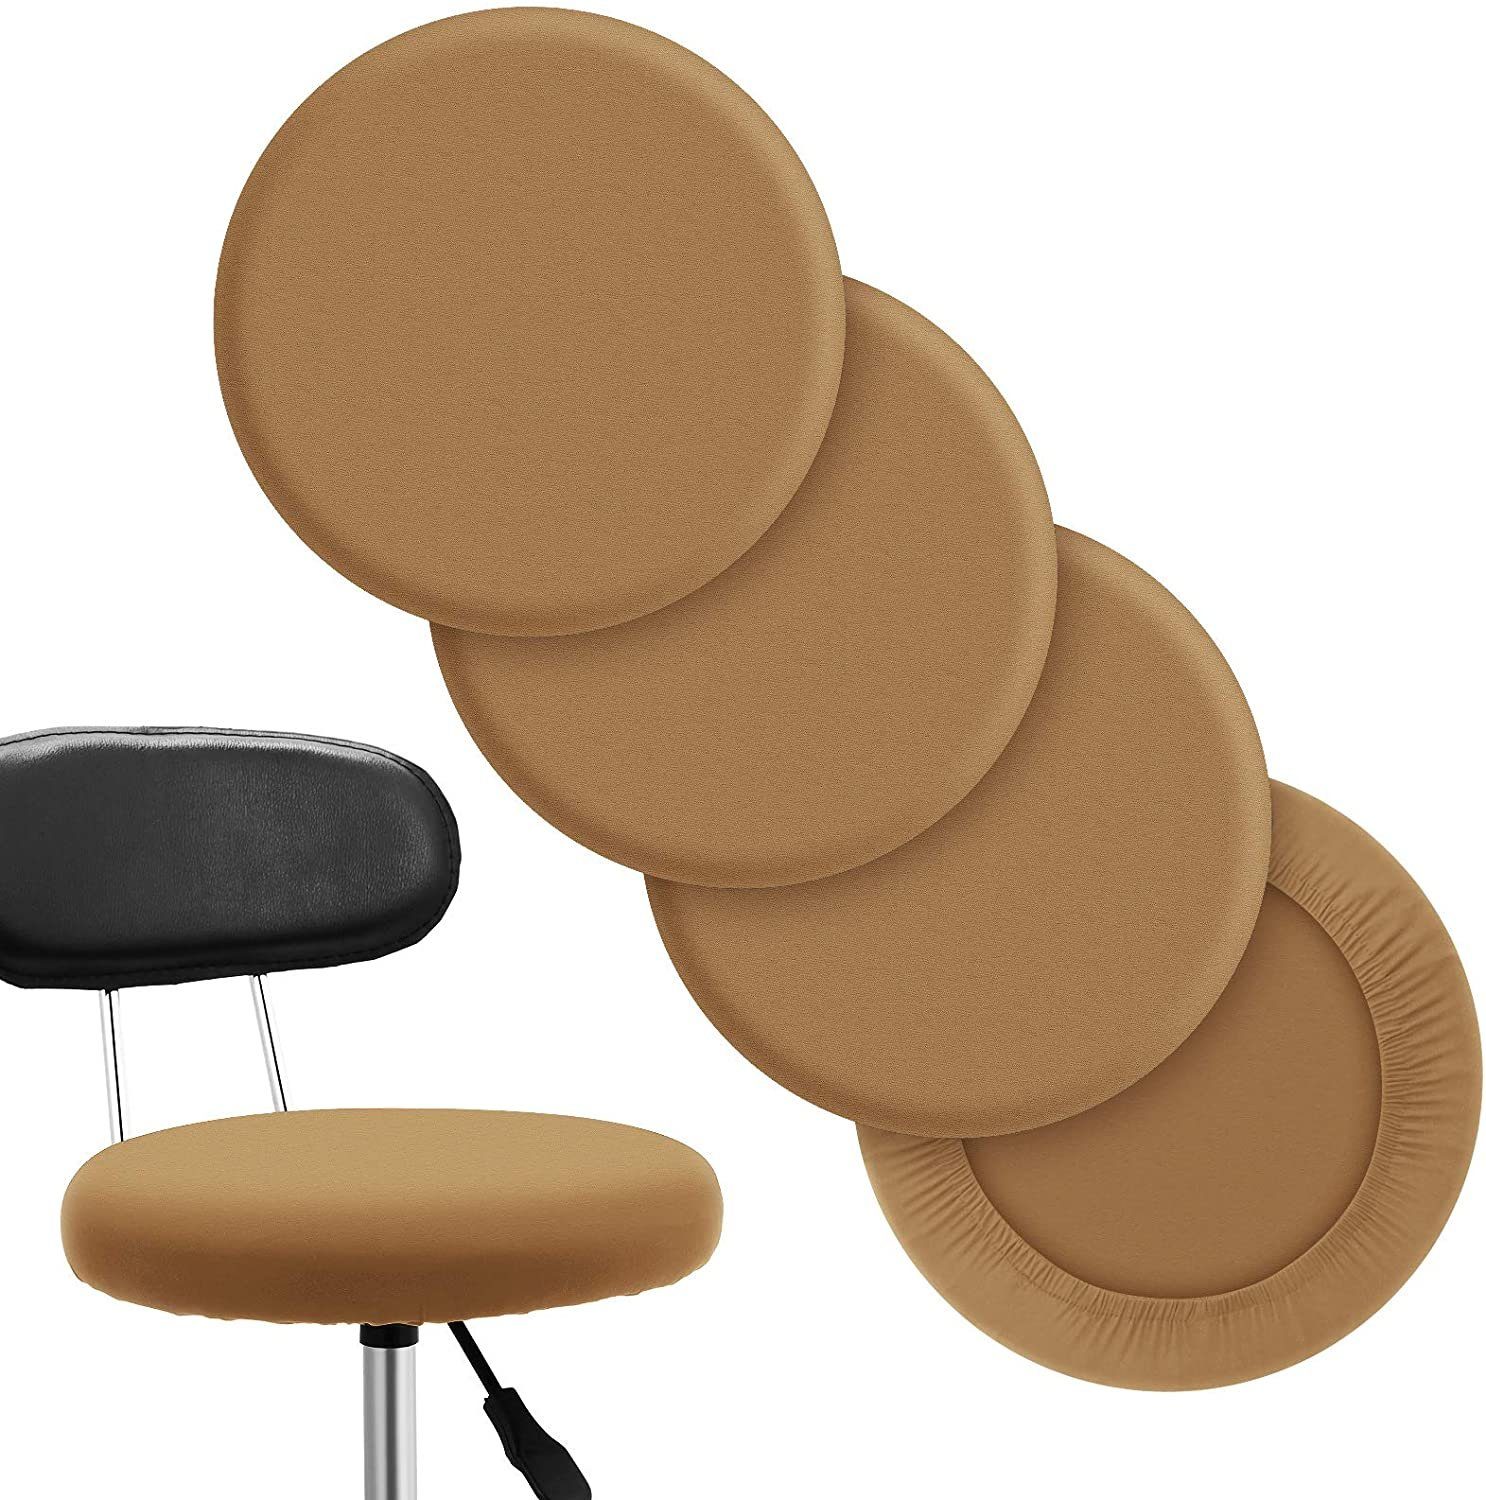 Runde Sitzbezug Kissen Stuhlbezug für Barhocker Stuhl 